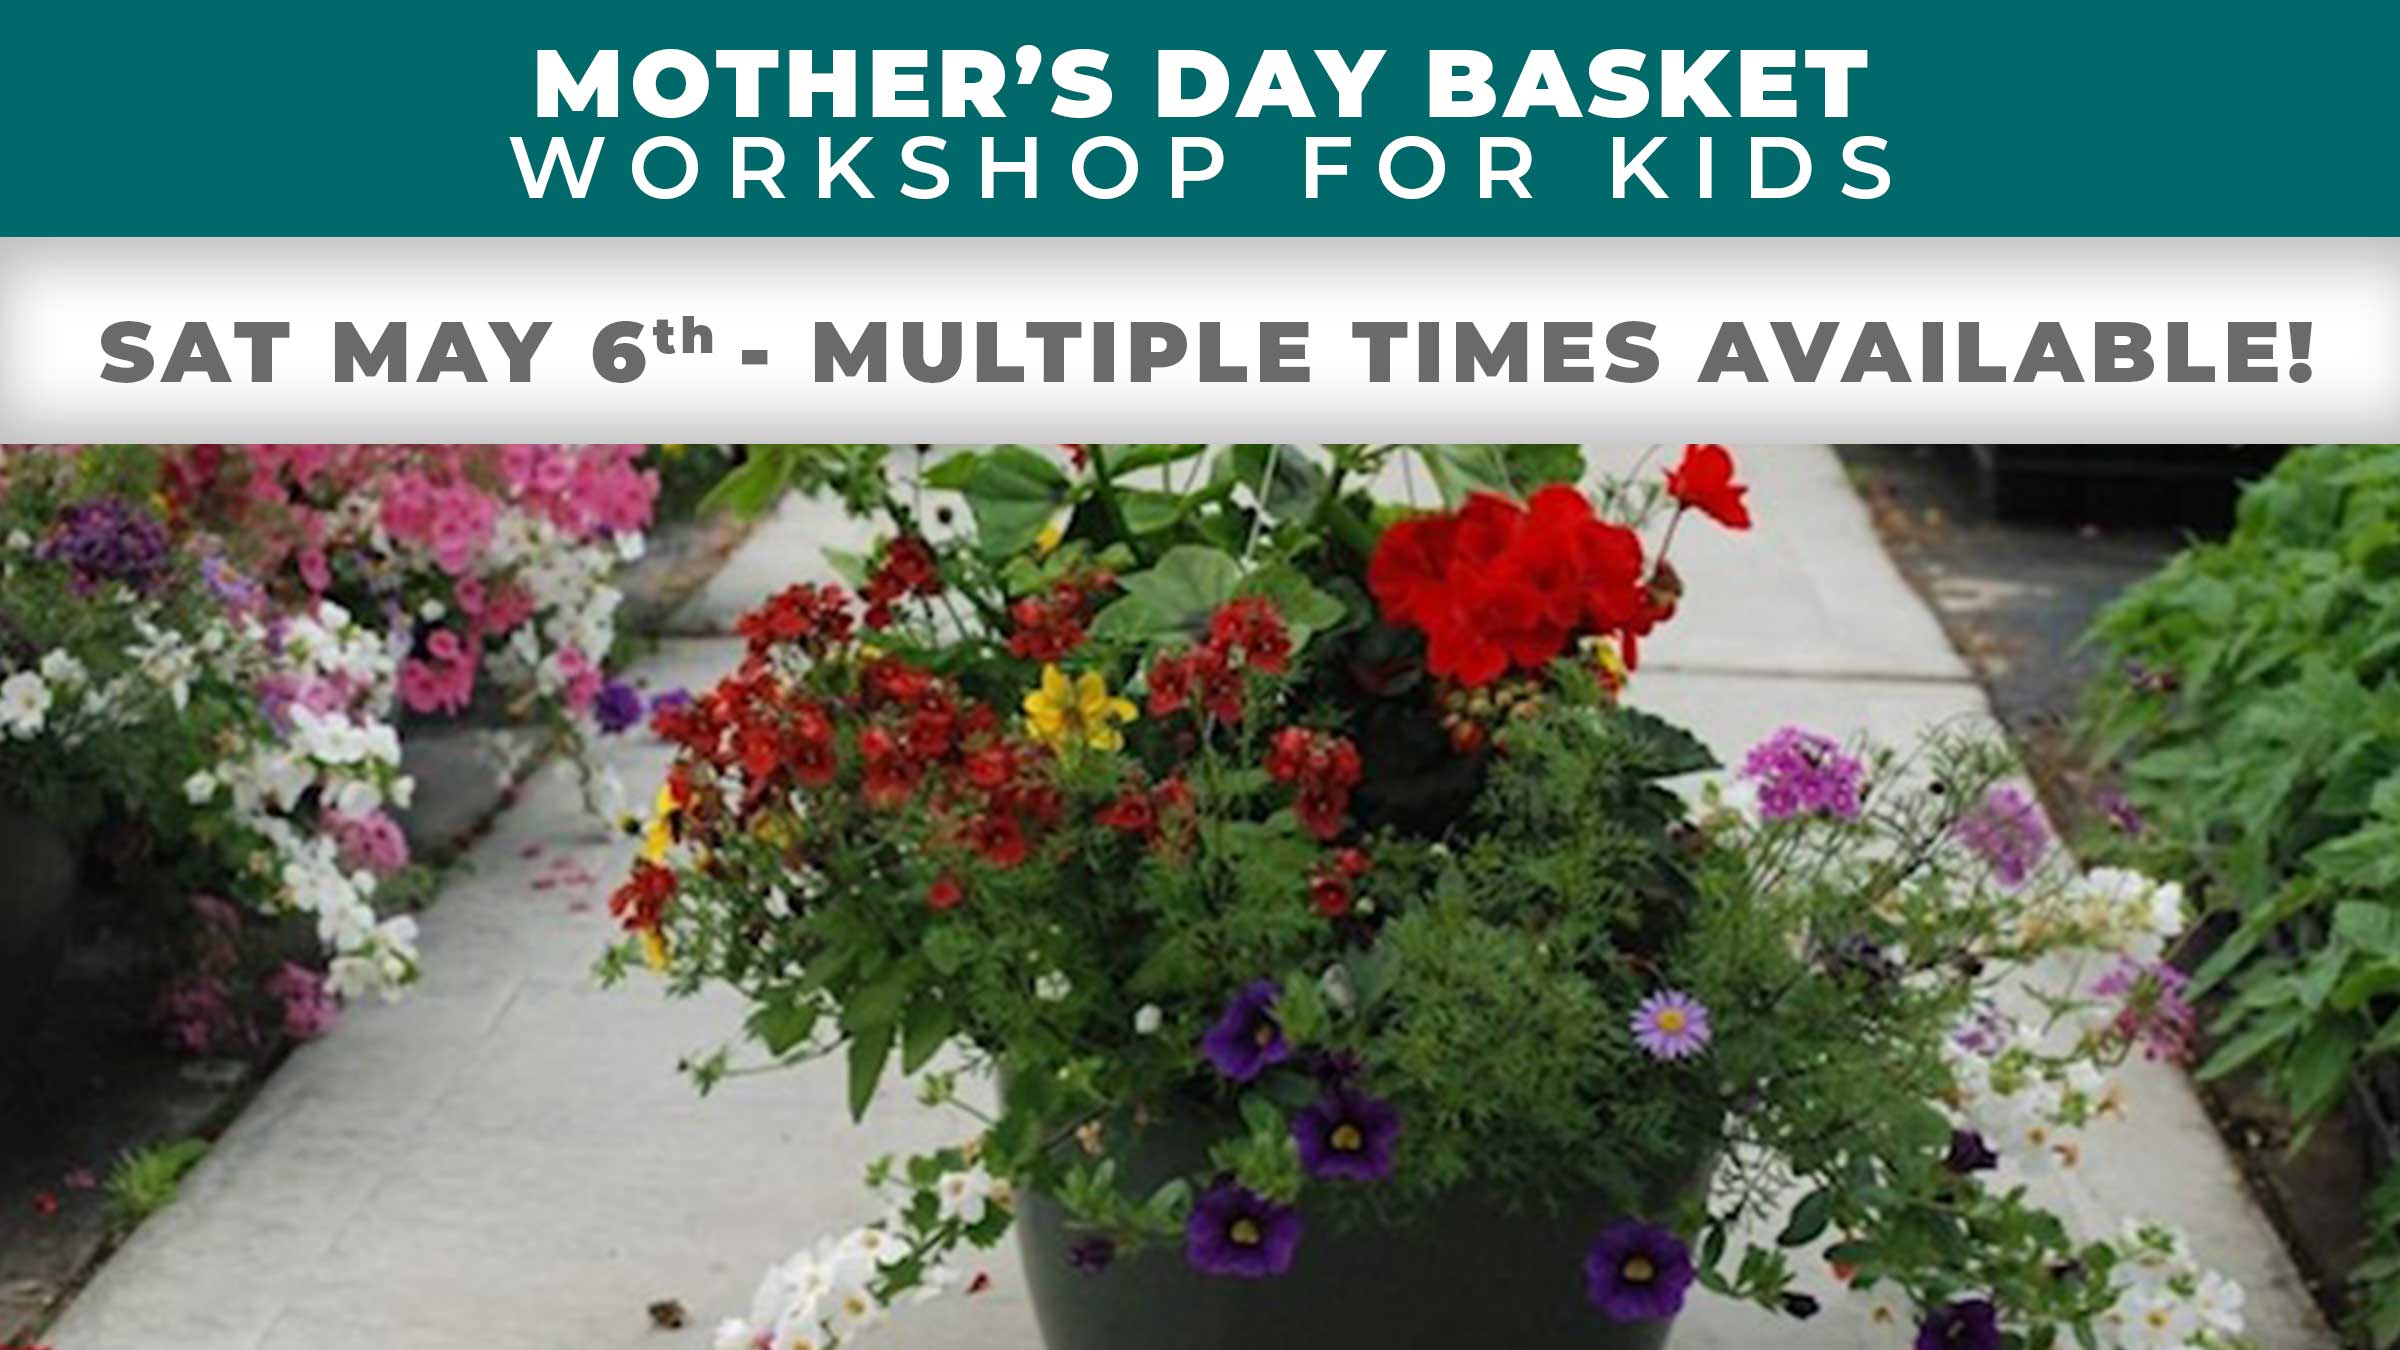 Mothers Day basket workshop for kids May 6